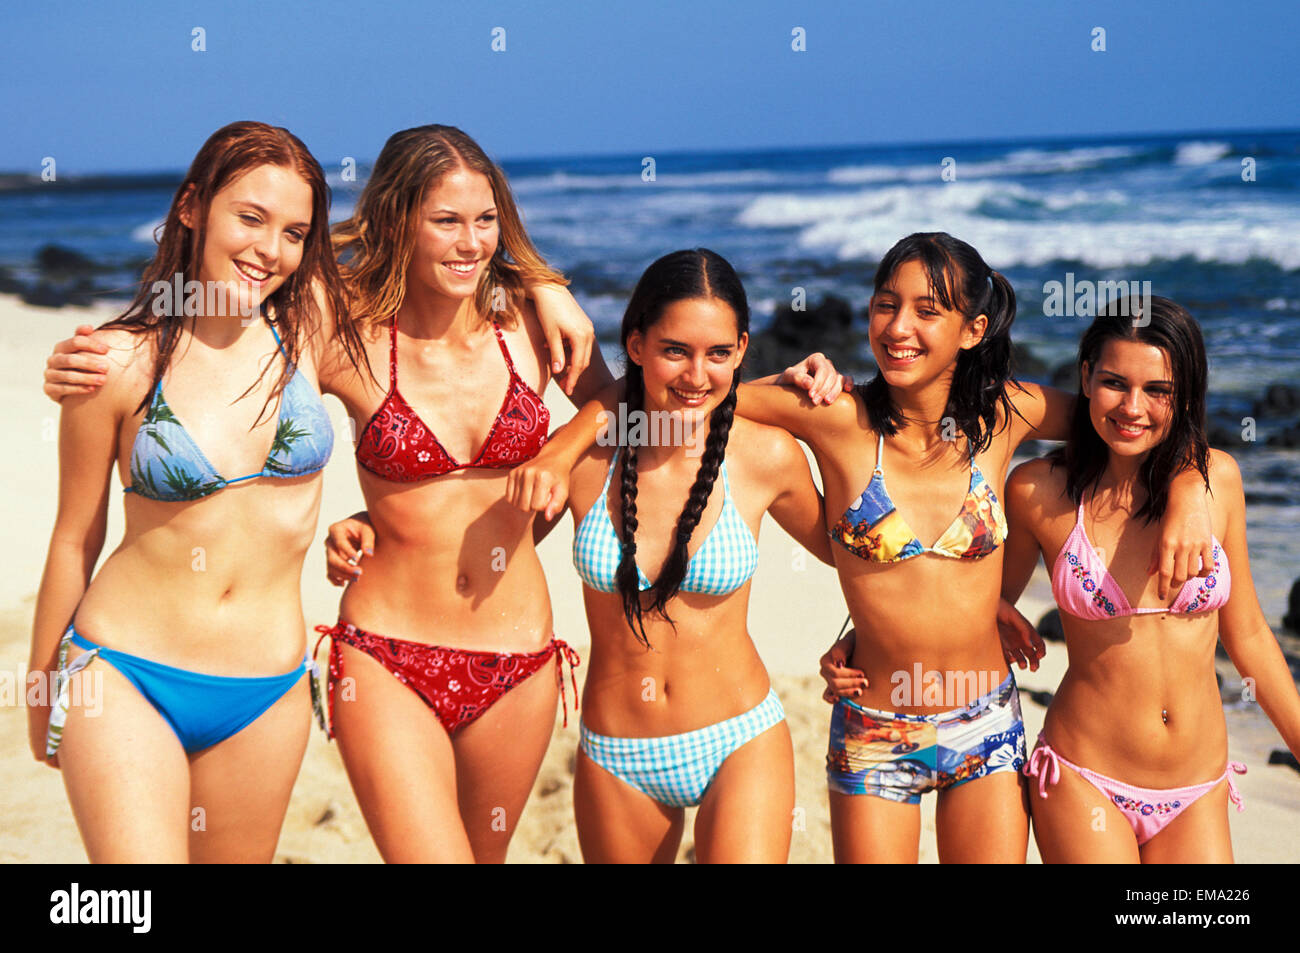 Naked girls beach photos Group Of Teenage Girls Walking Along Beach Arm Over Shoulders Stock Photo Alamy